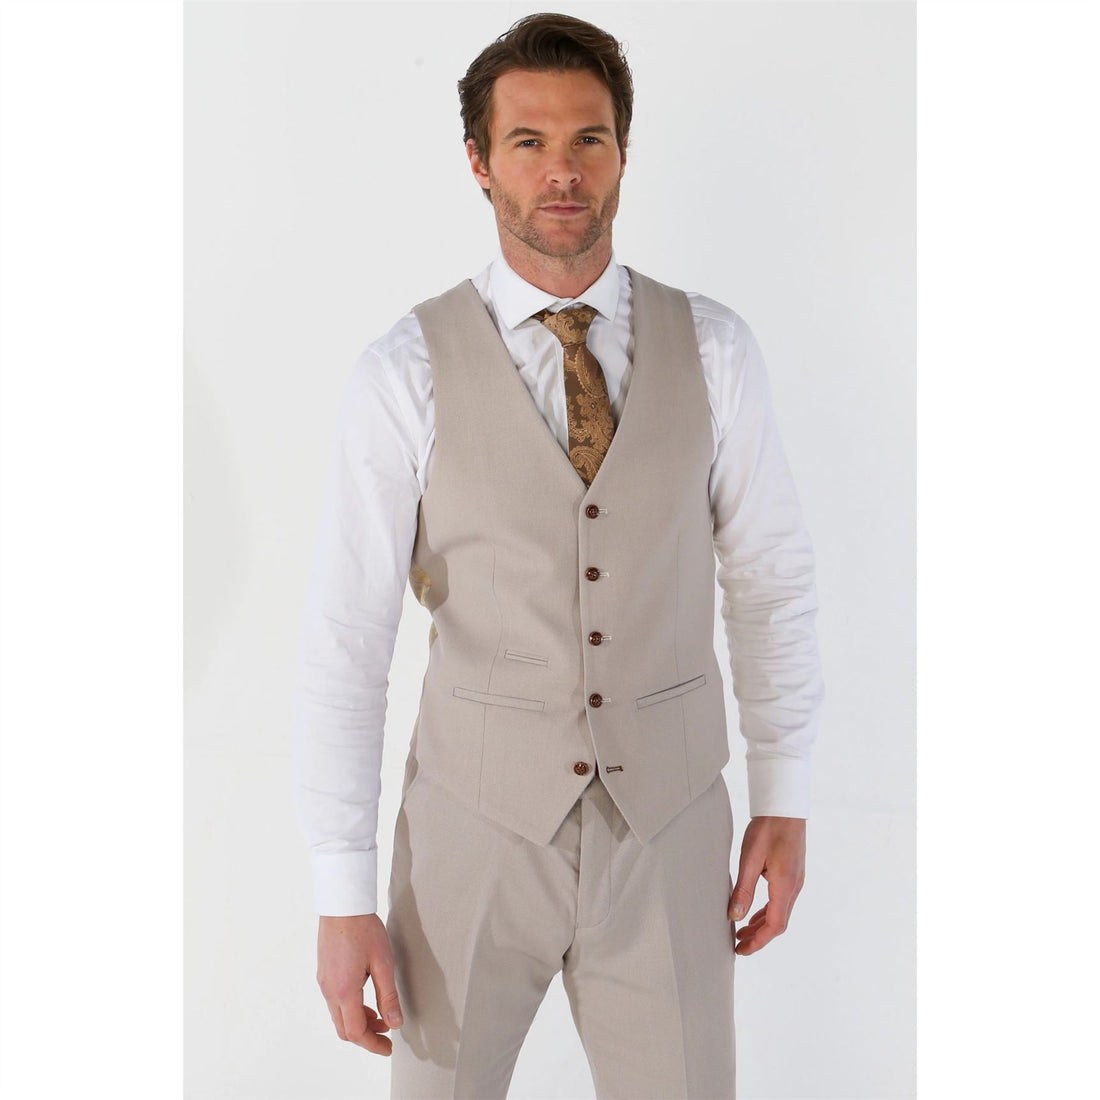 Men's Waistcoat Beige Birdseye Tailored Fit Summer Wedding Vest